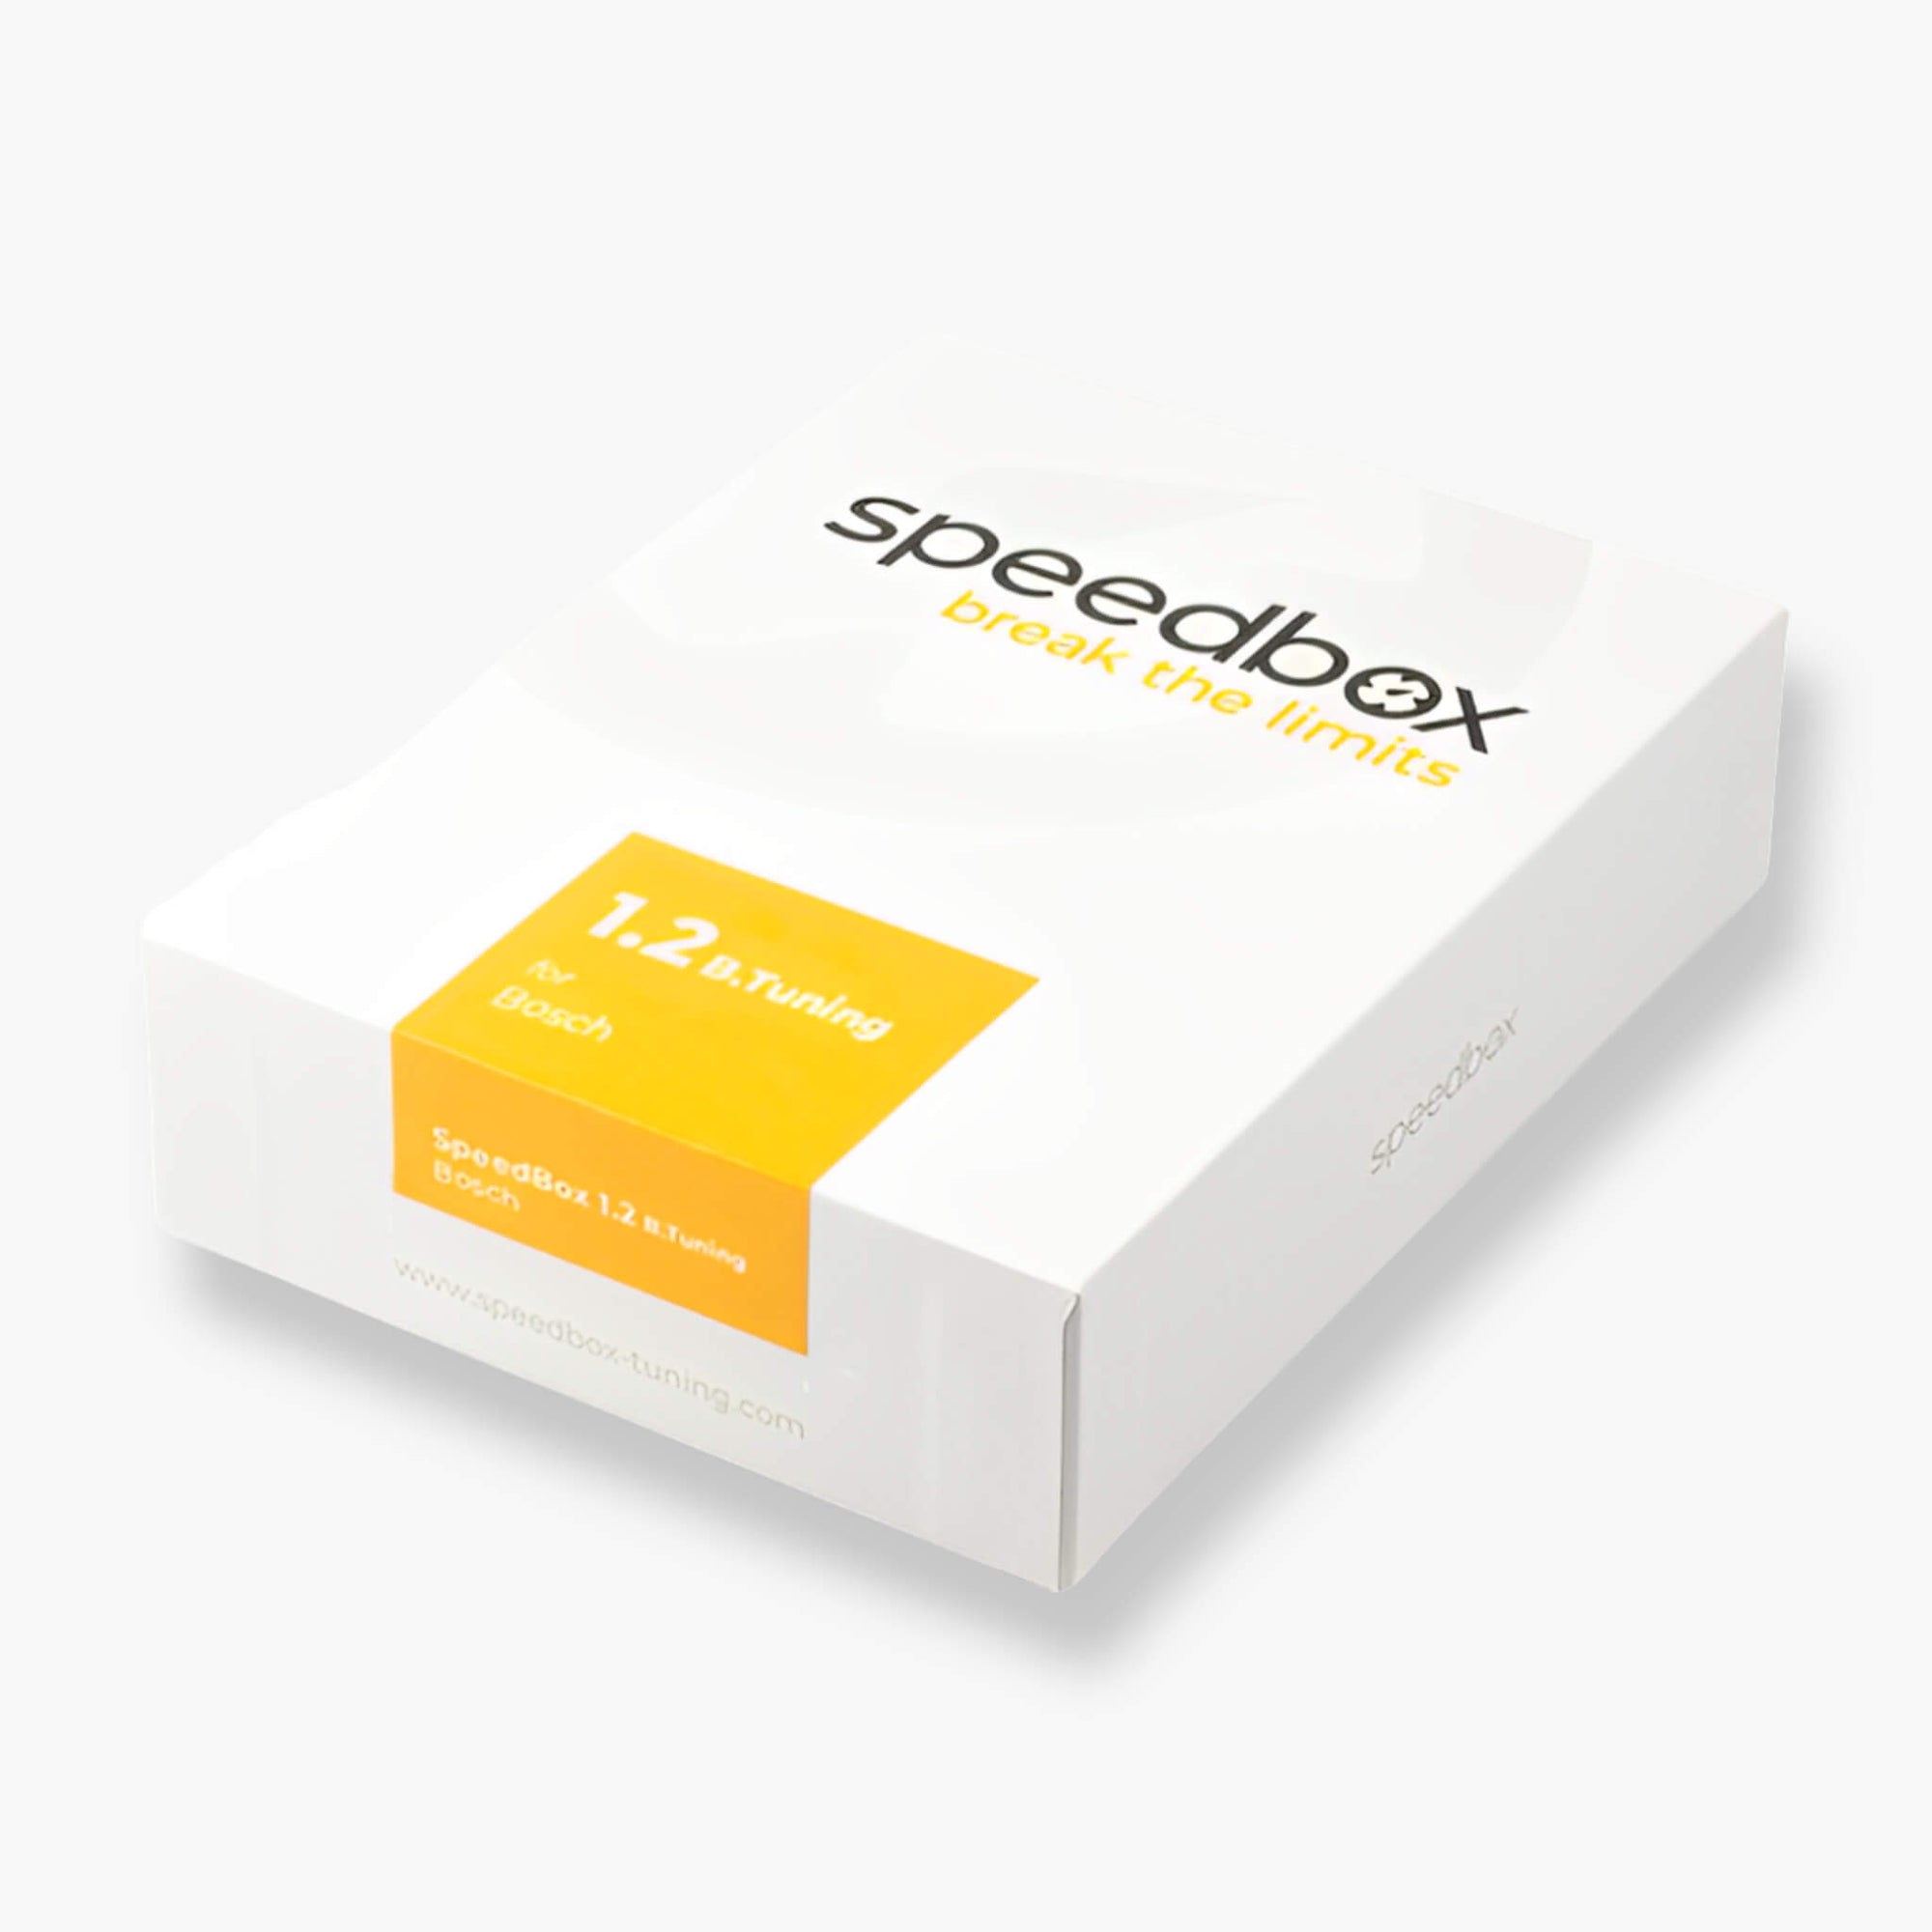 SpeedBox 1.2 B.Tuning for Bosch (Smart System + Rim Magnet) - EL-SYKKELTRIM